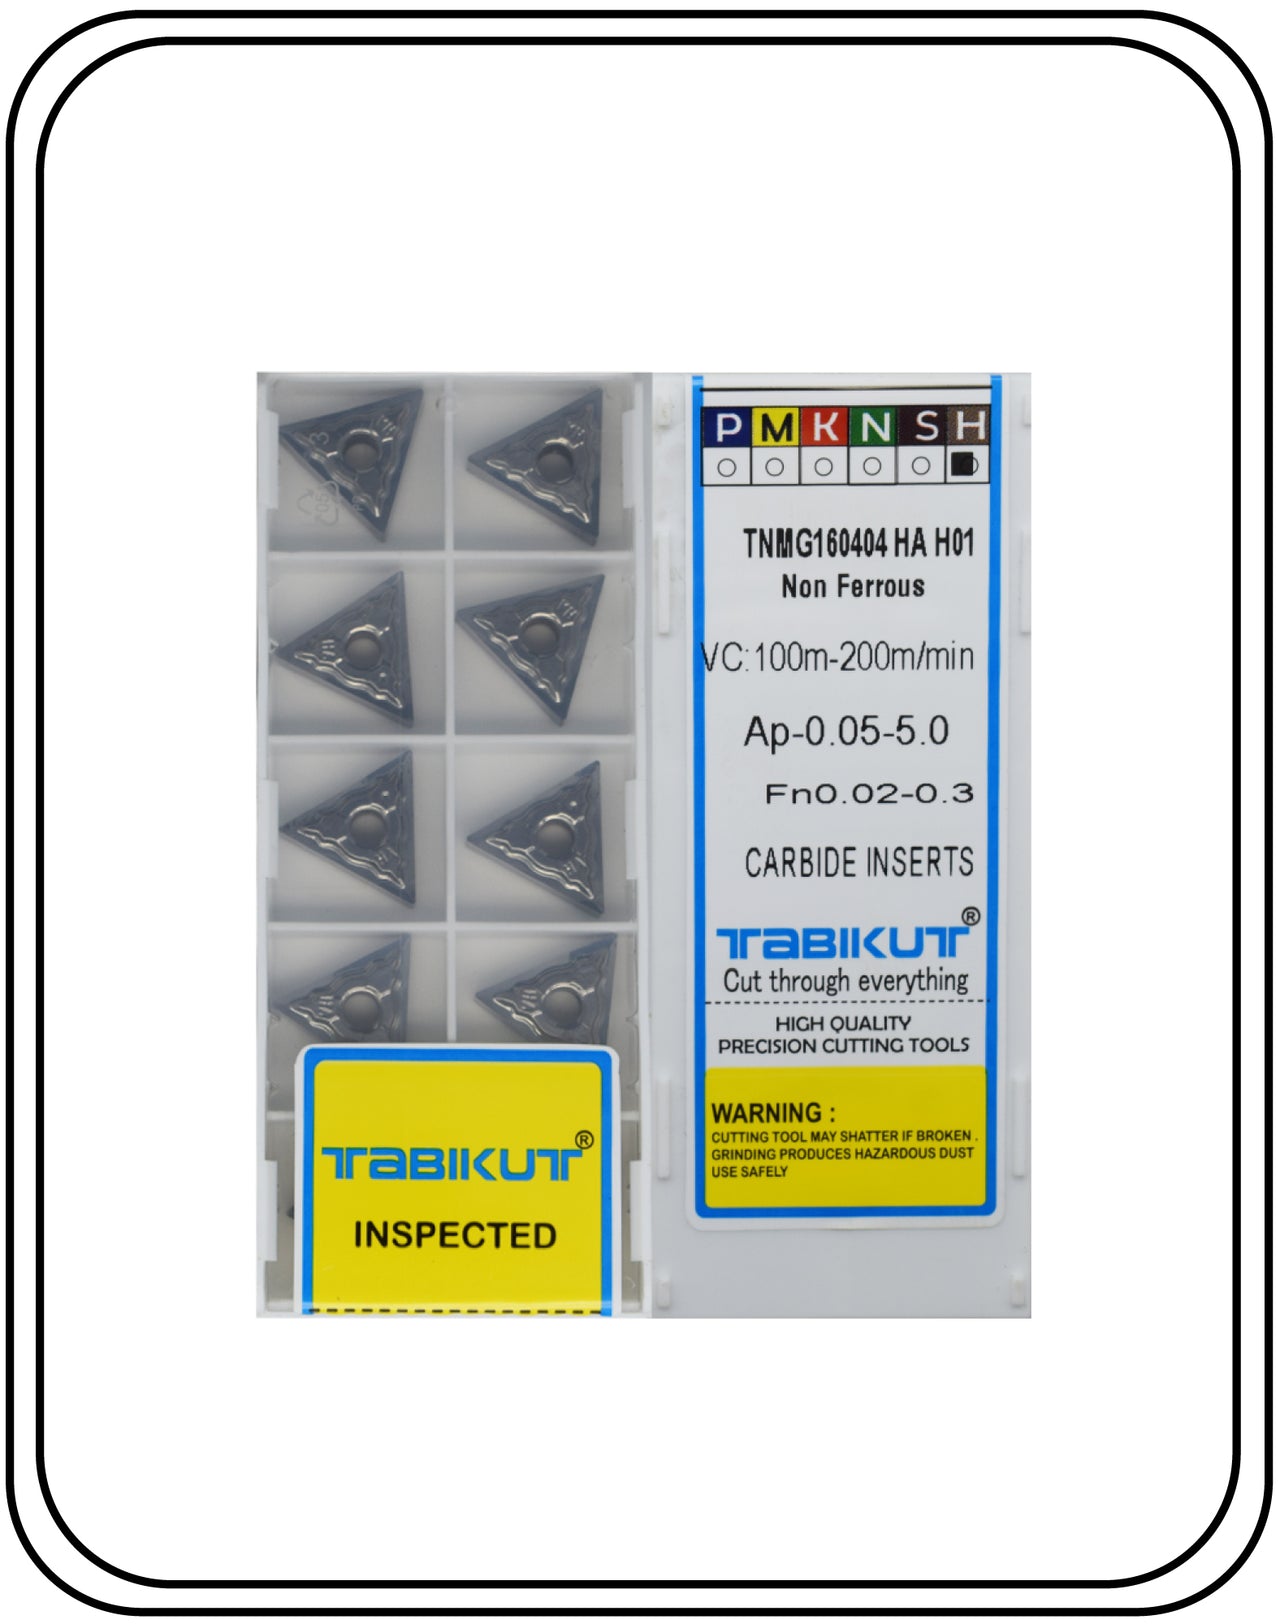 TNMG160404/8 HA N01 aluminum machining insert pack of 10